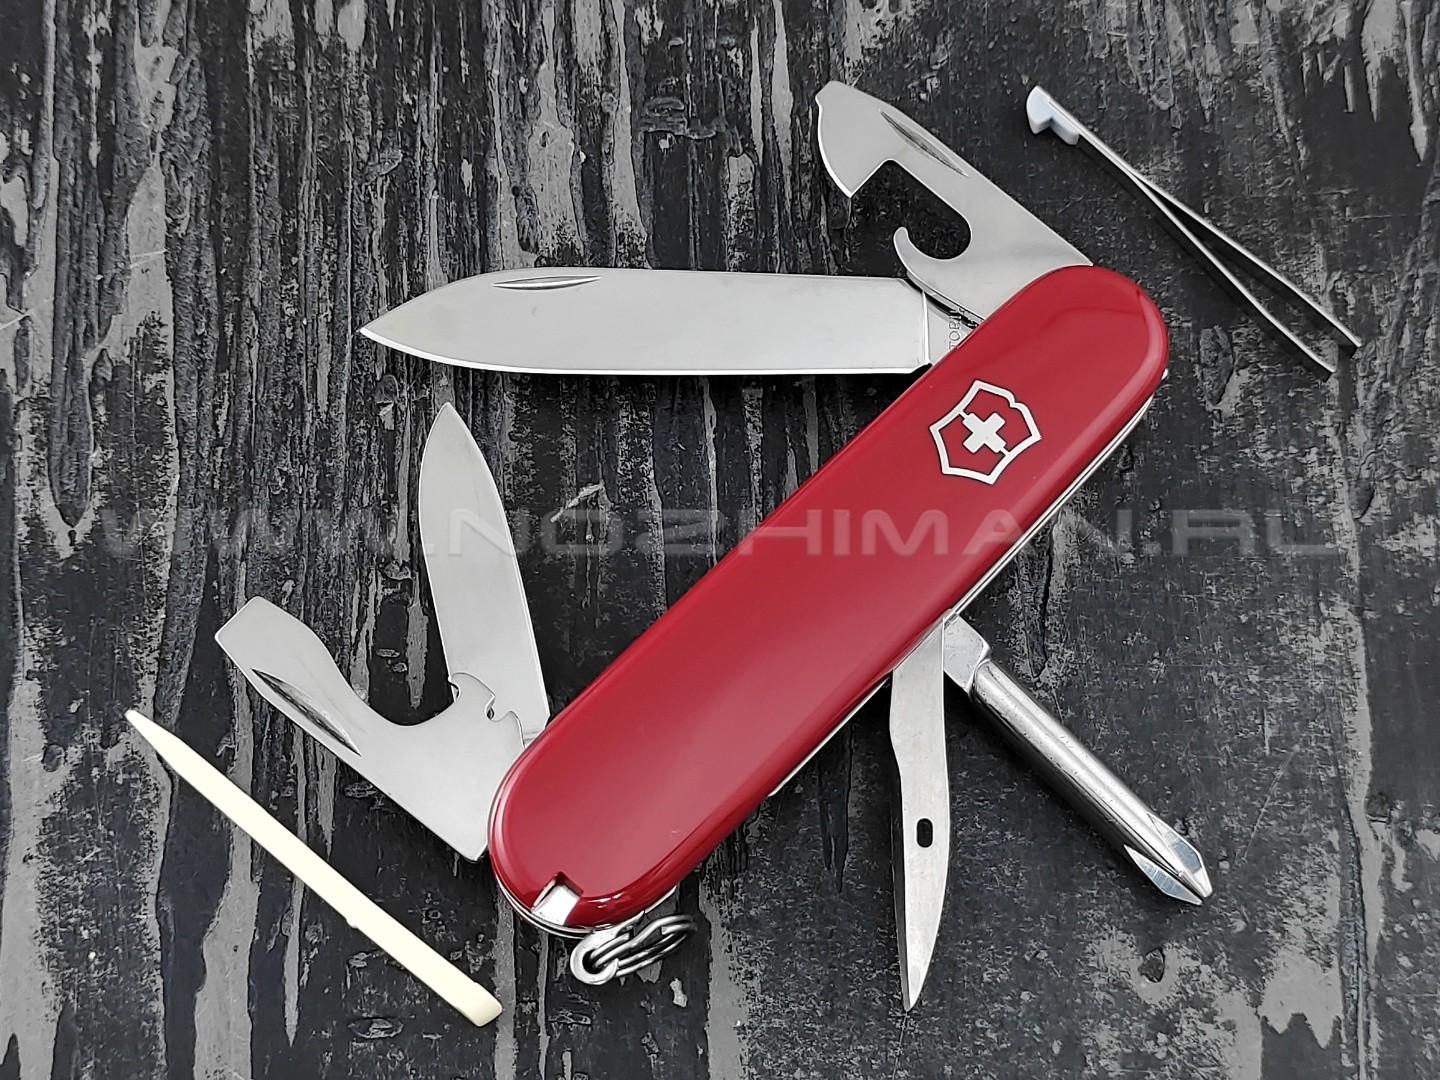 Швейцарский нож Victorinox 1.4603 Tinker (12 функций)